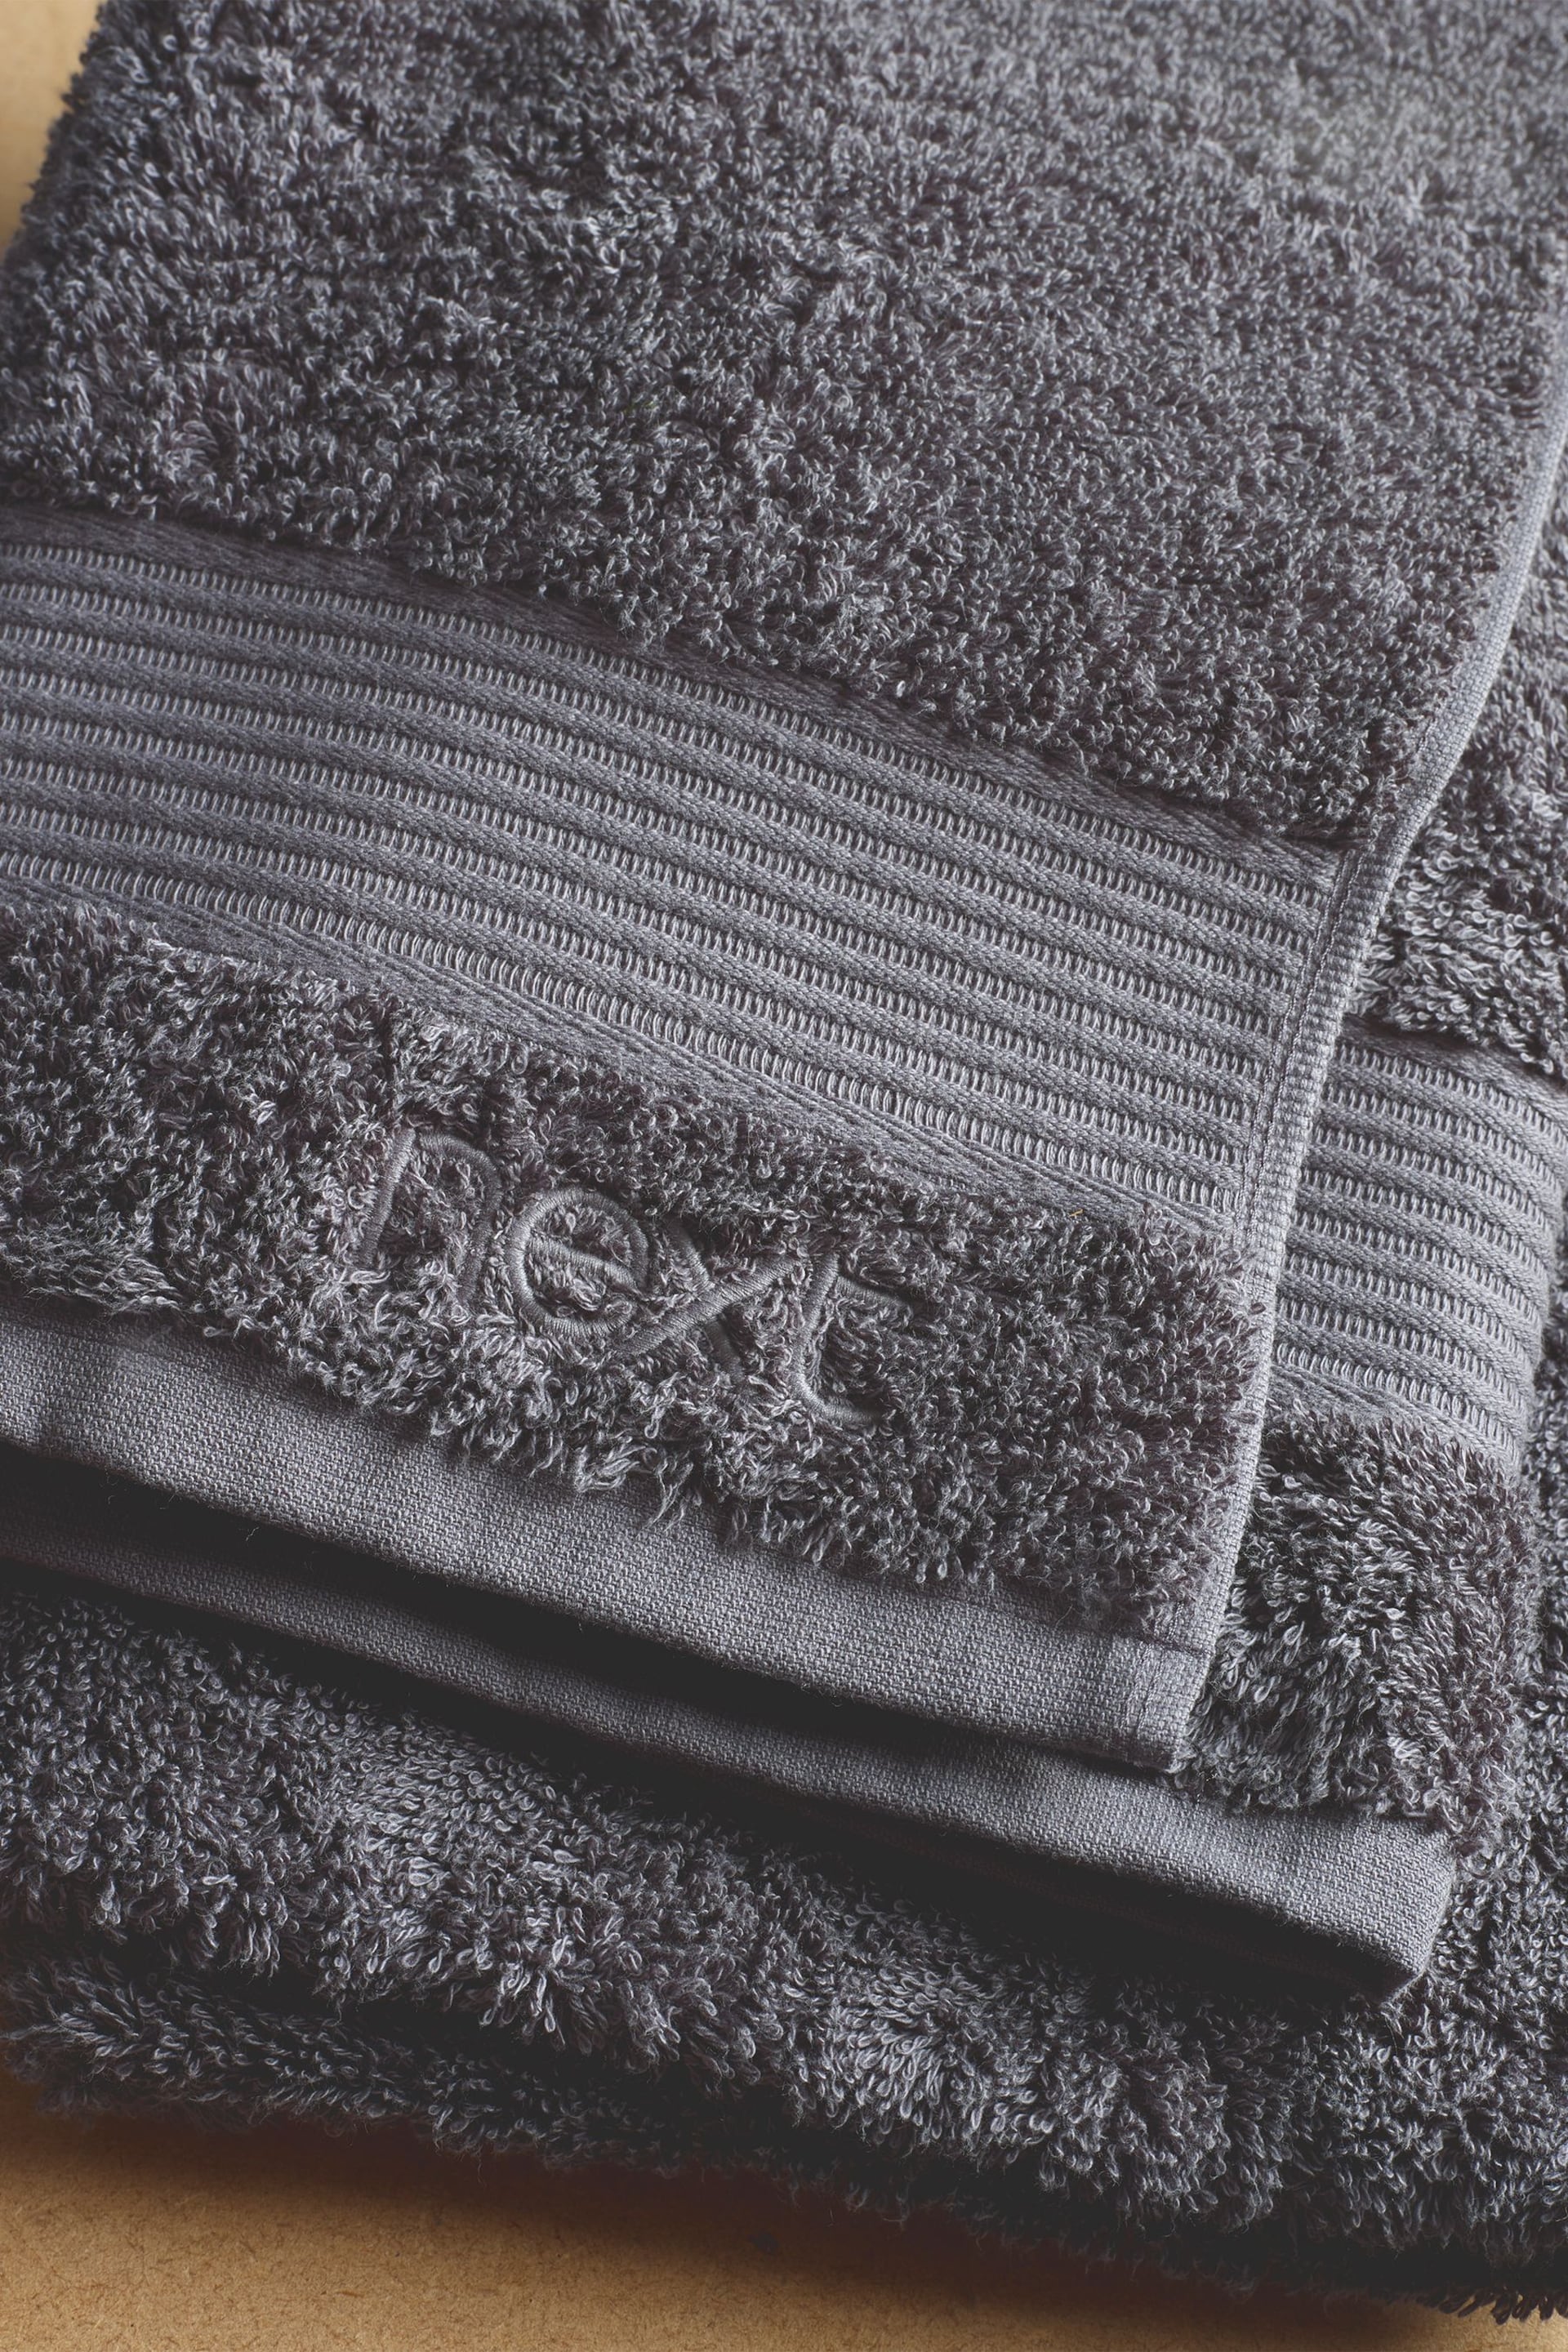 Charcoal Grey Egyptian Cotton Towel - Image 5 of 5